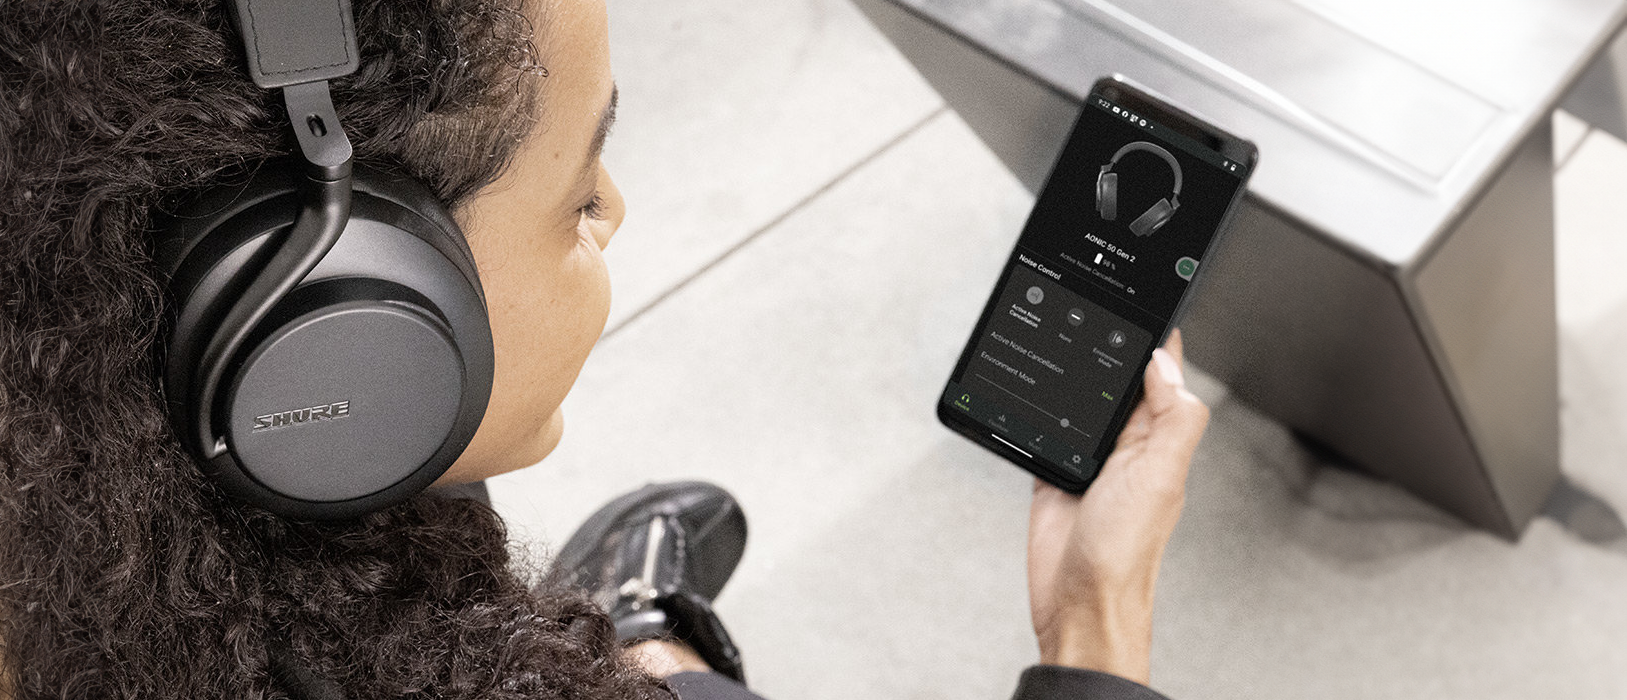 Shure AONIC 50 Gen 2 Wireless Noise Cancelling Headphones custom app